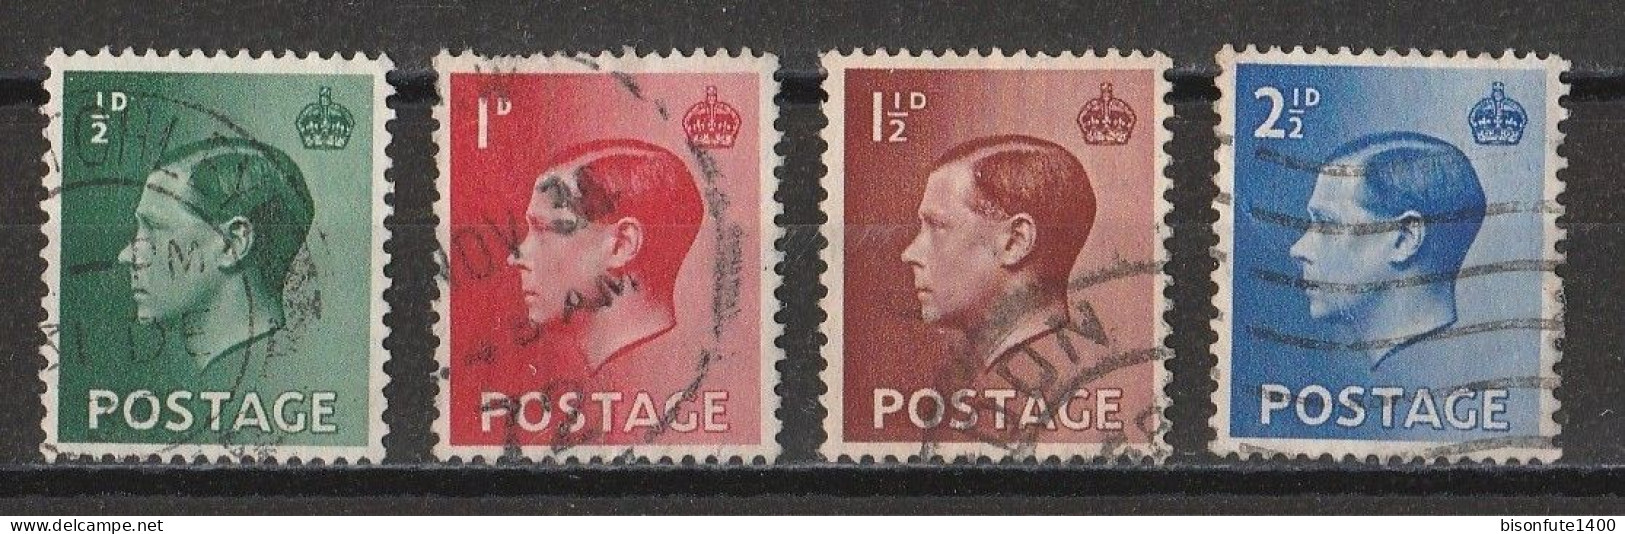 Grande-Bretagne 1936 : Timbres Yvert & Tellier N° 205 - 206 - 207 Et 208 Oblitérés. - Used Stamps